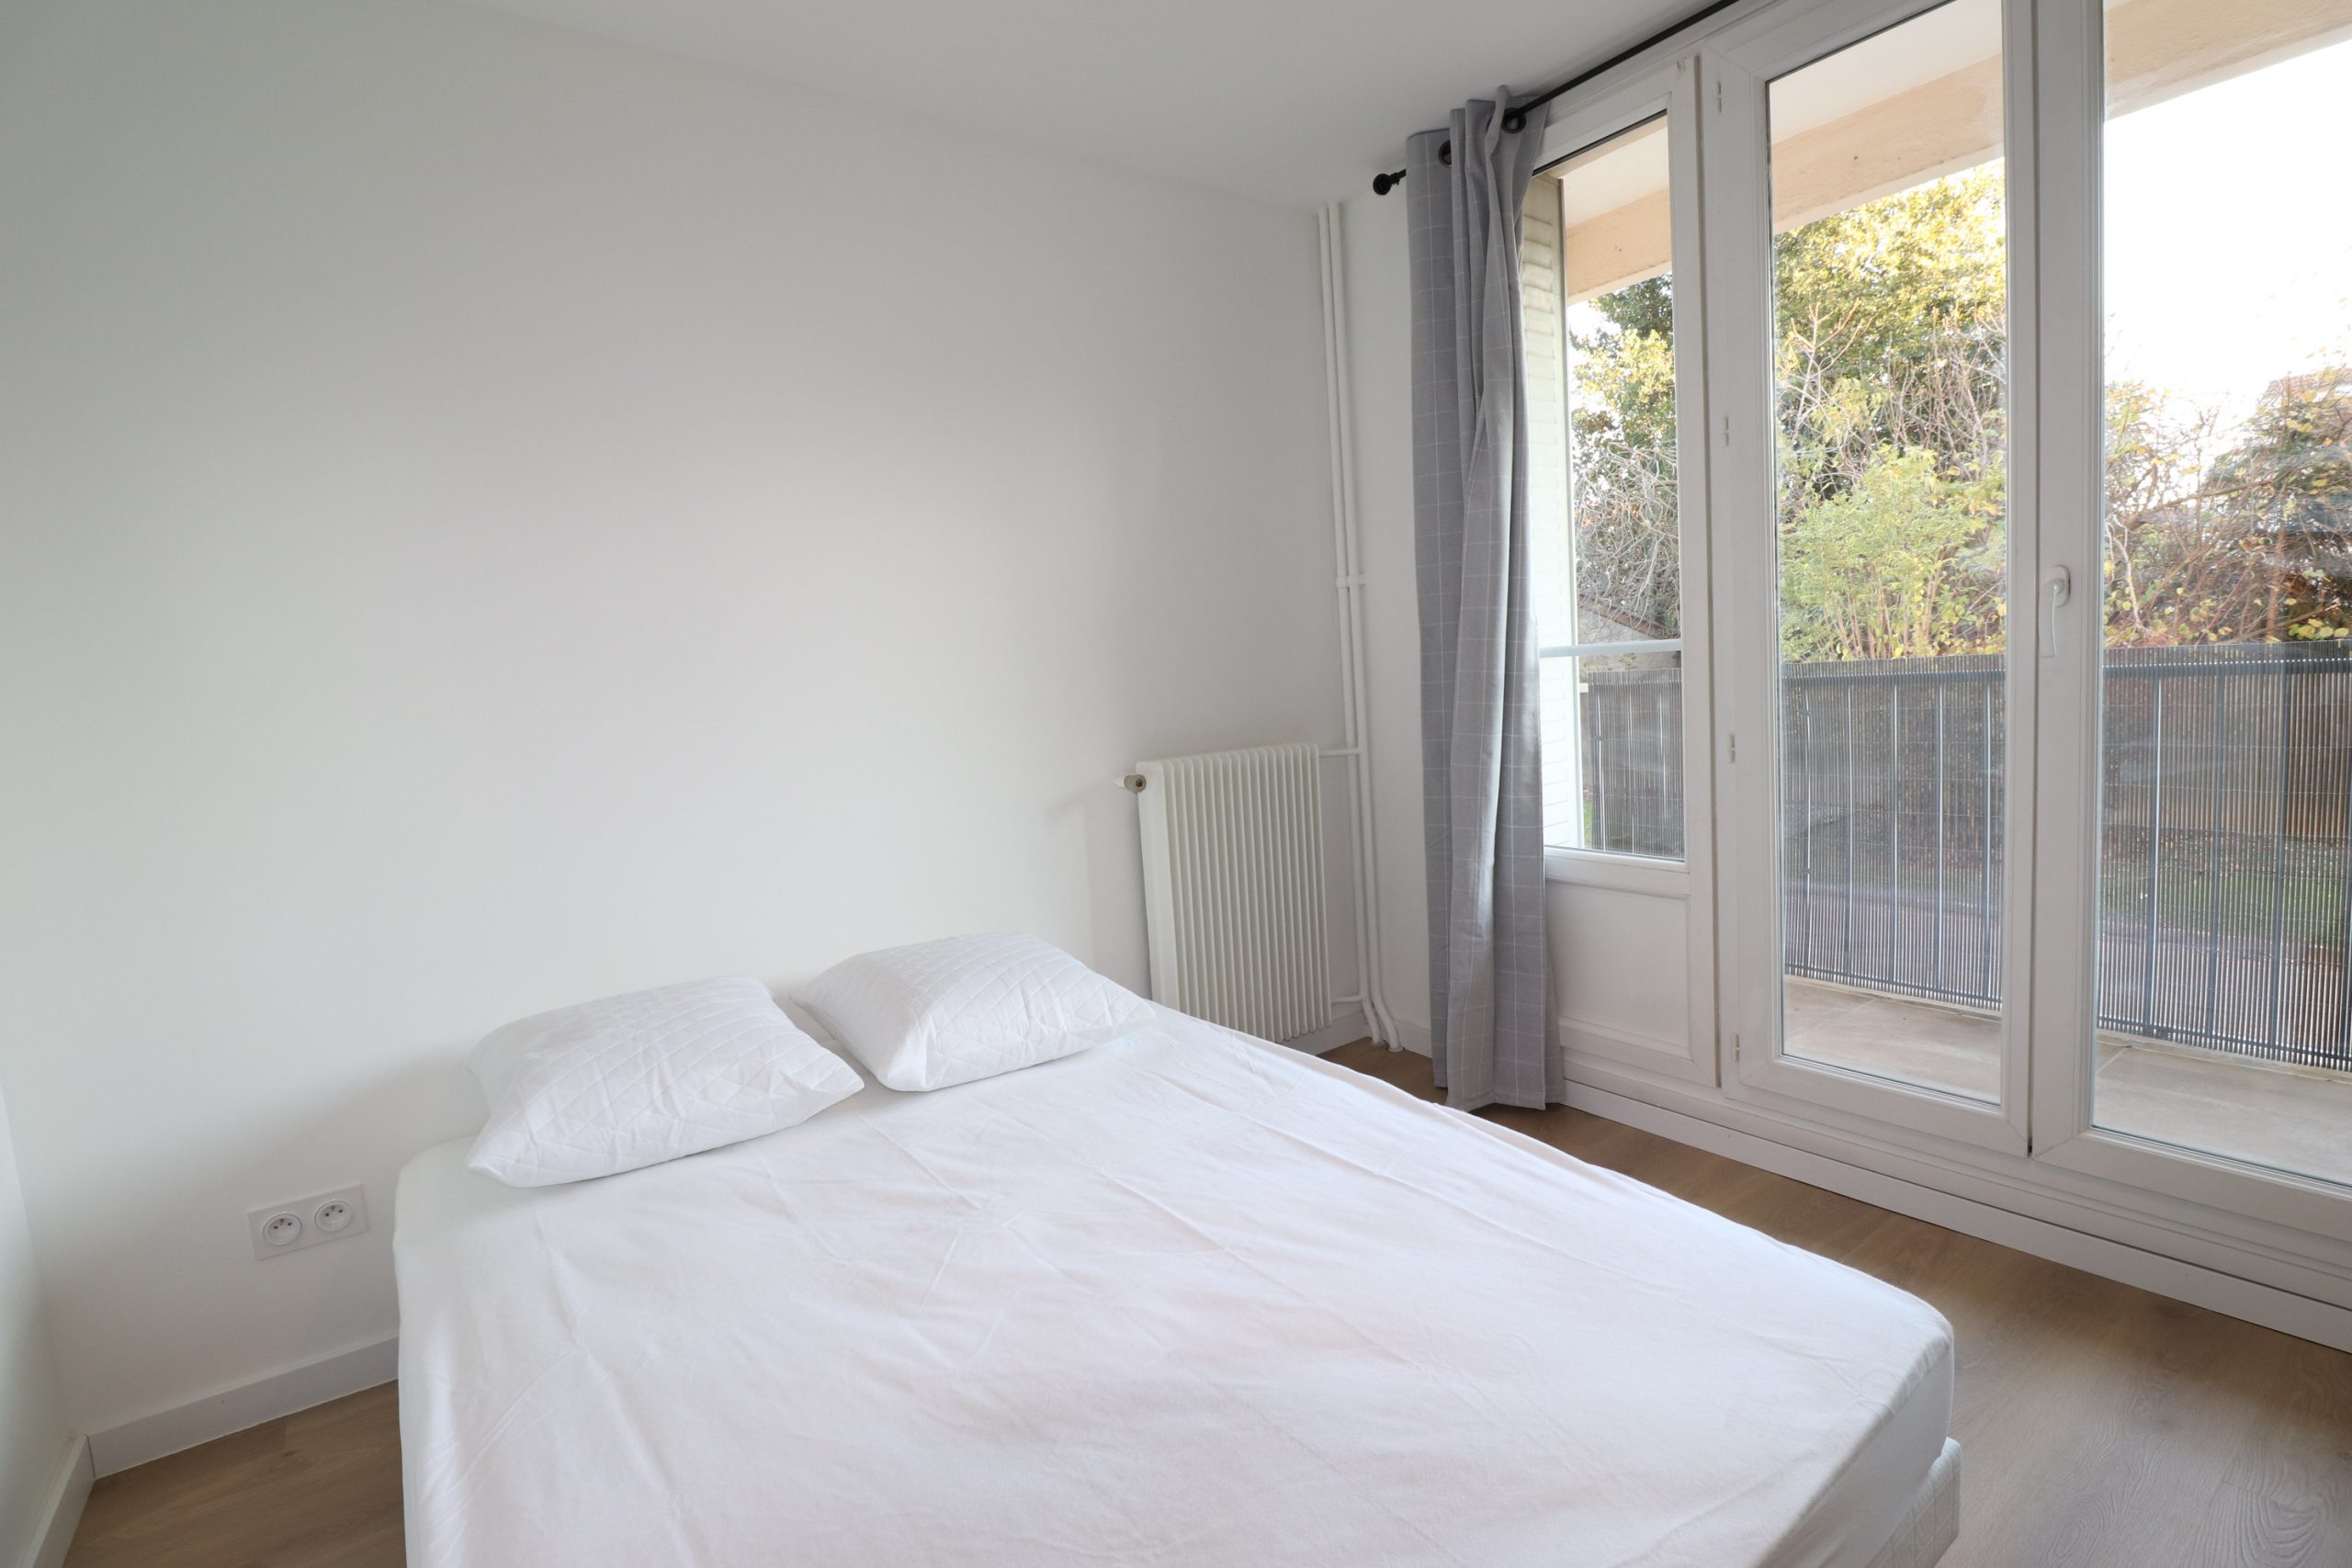 Location appartement Villeurbanne - Chambre 1